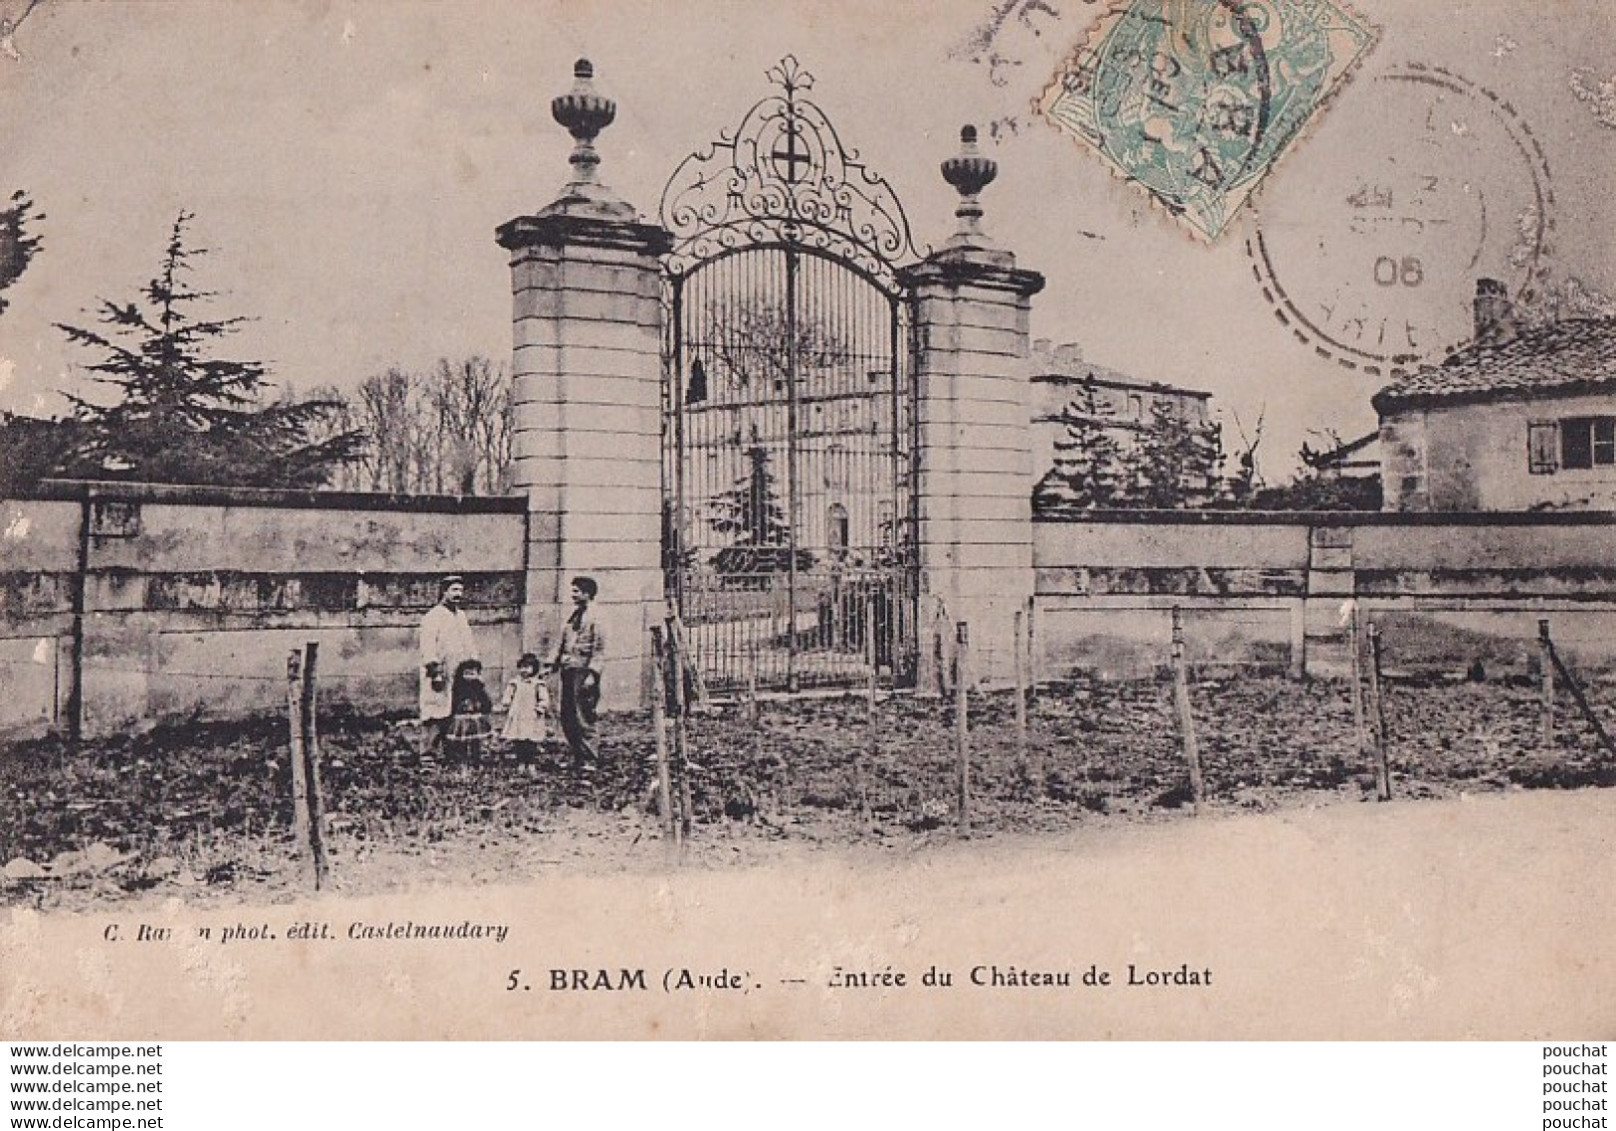 L12-11) BRAM (AUDE) ENTREE DU CHATEAU DE LORDAT - ANIMEE - HABITANTS - EN 1906 - Bram